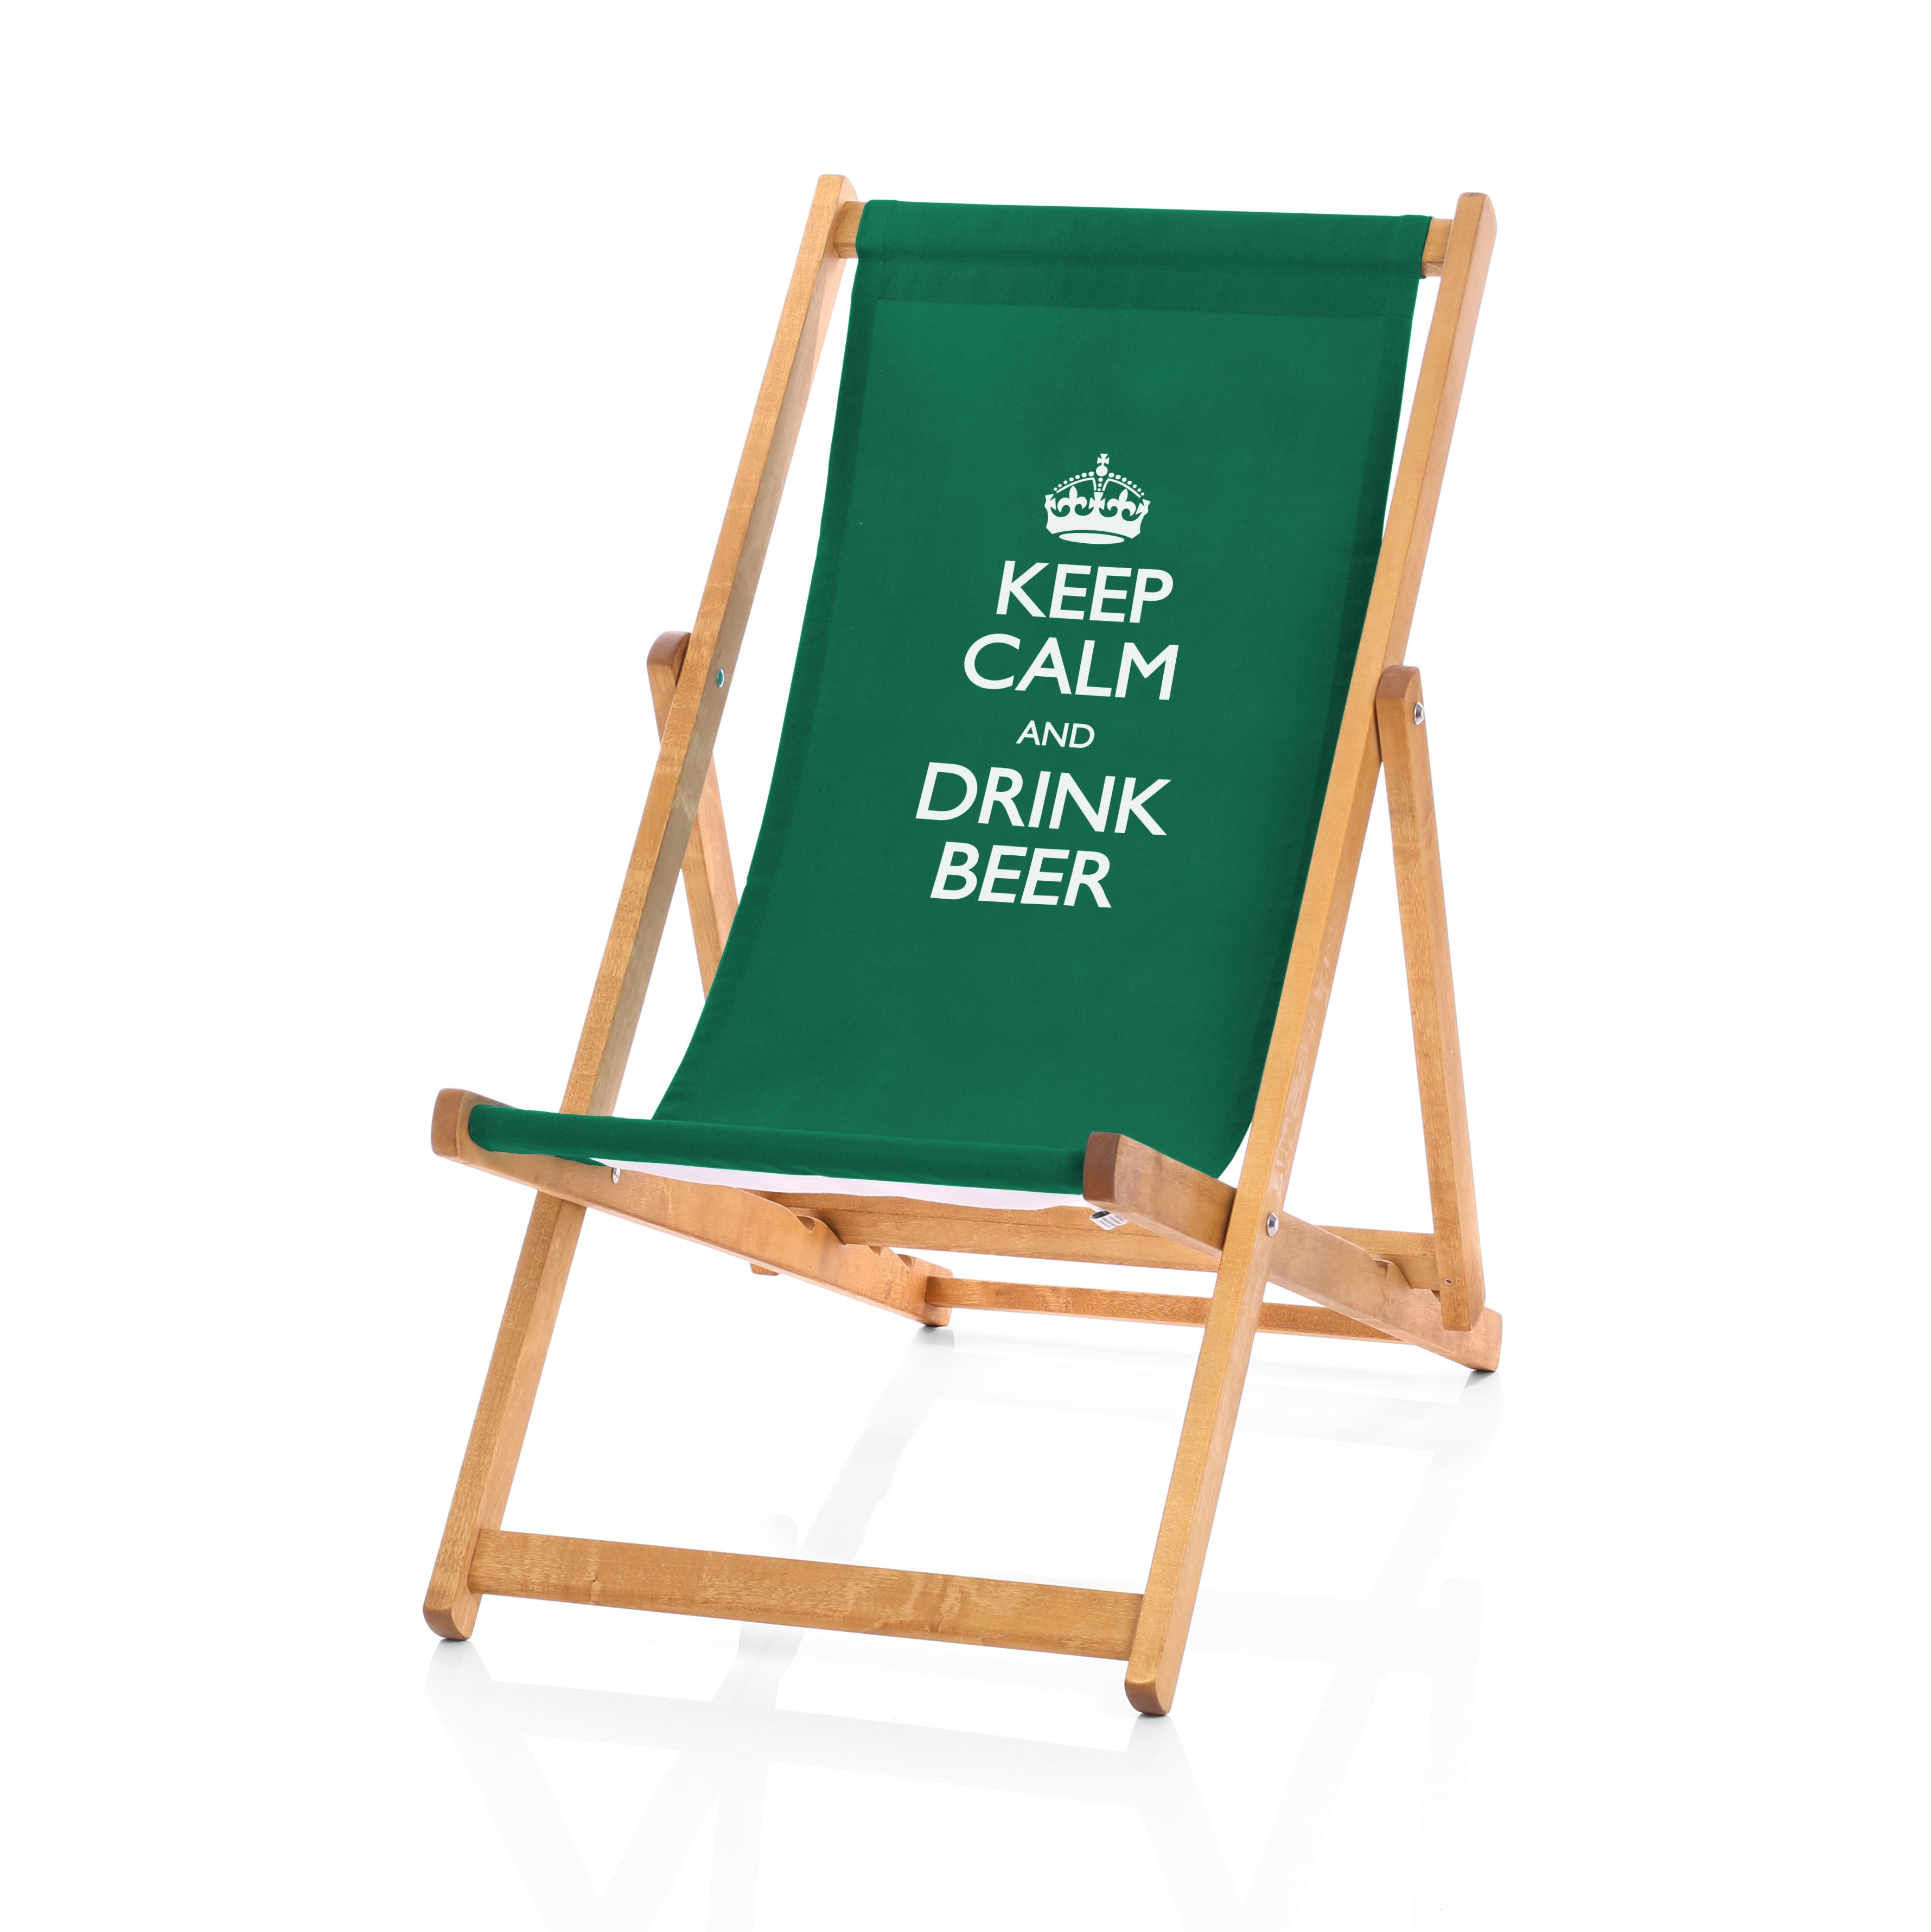 Hardwood Deckchairs - Keep Calm and Drink Beer